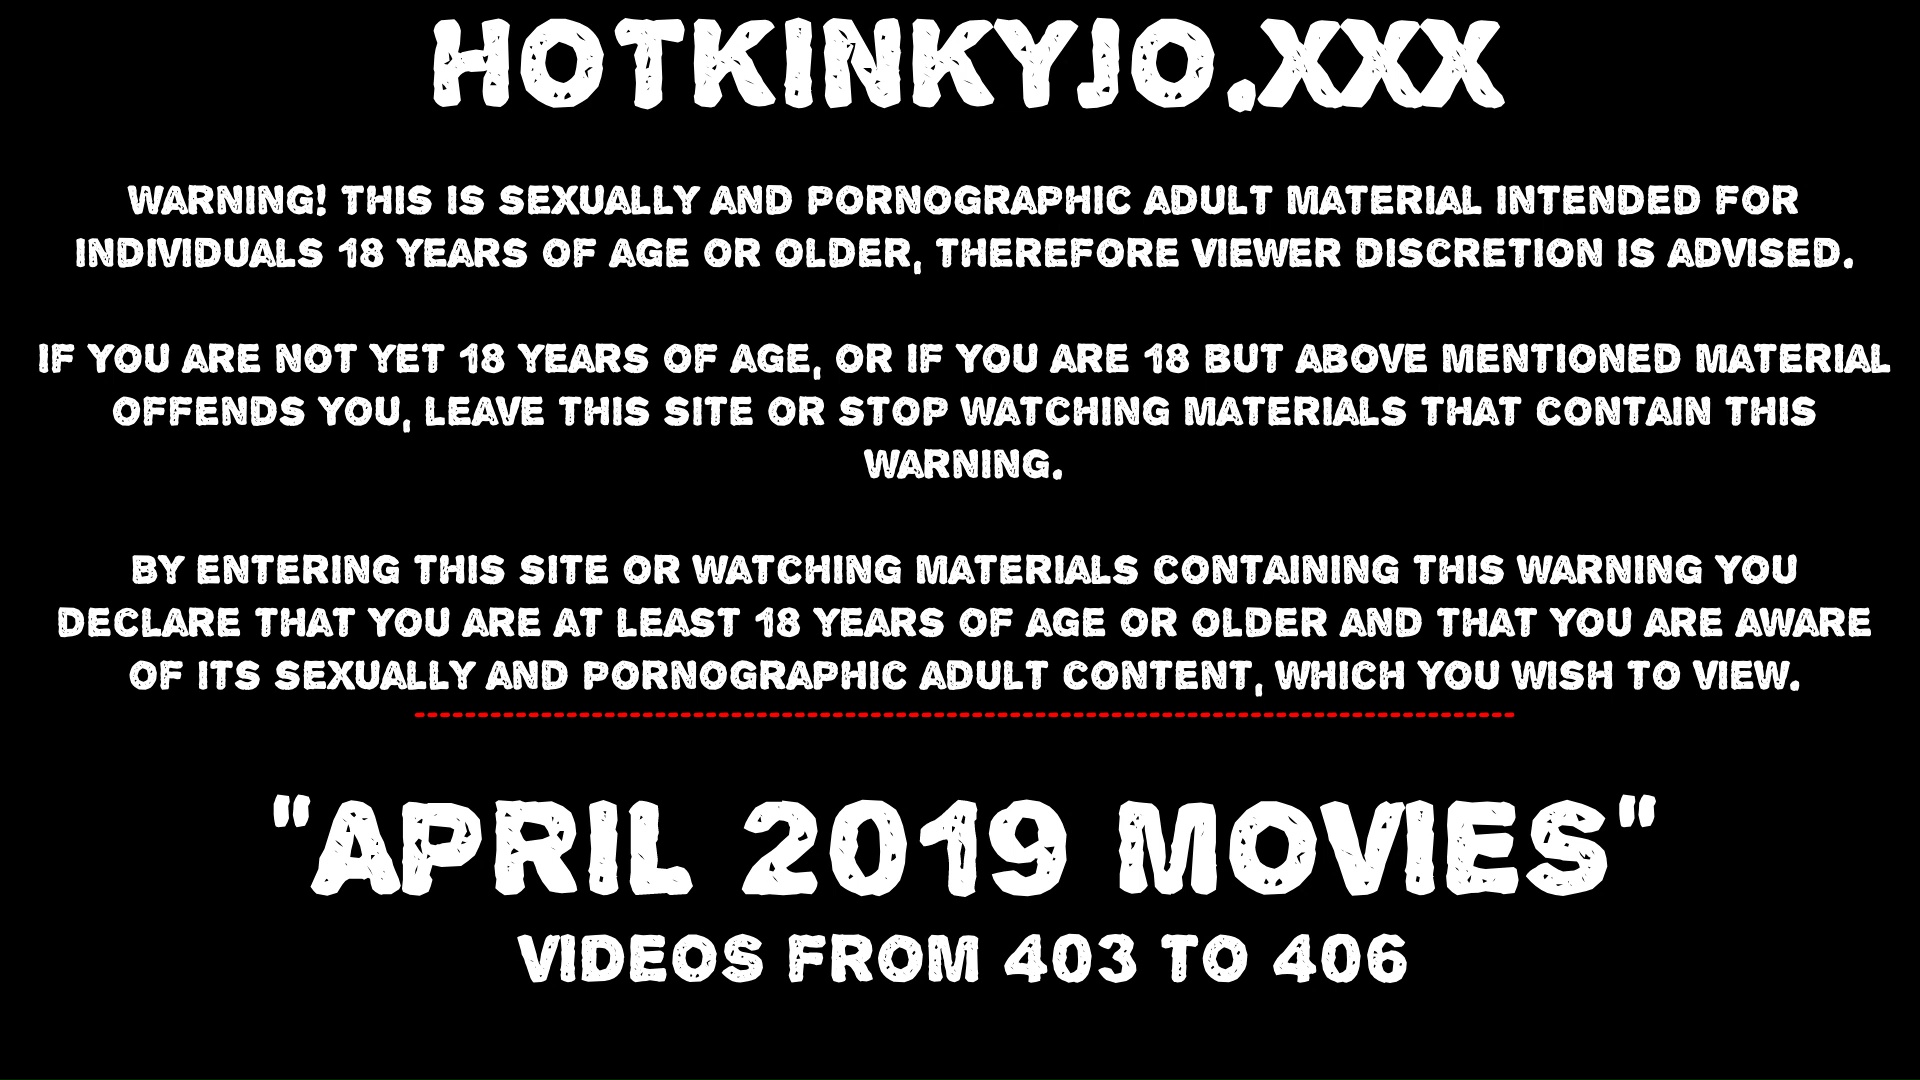 APRIL 2019 News at HOTKINKYJO site extreme anal prolapse, dildos & fisting